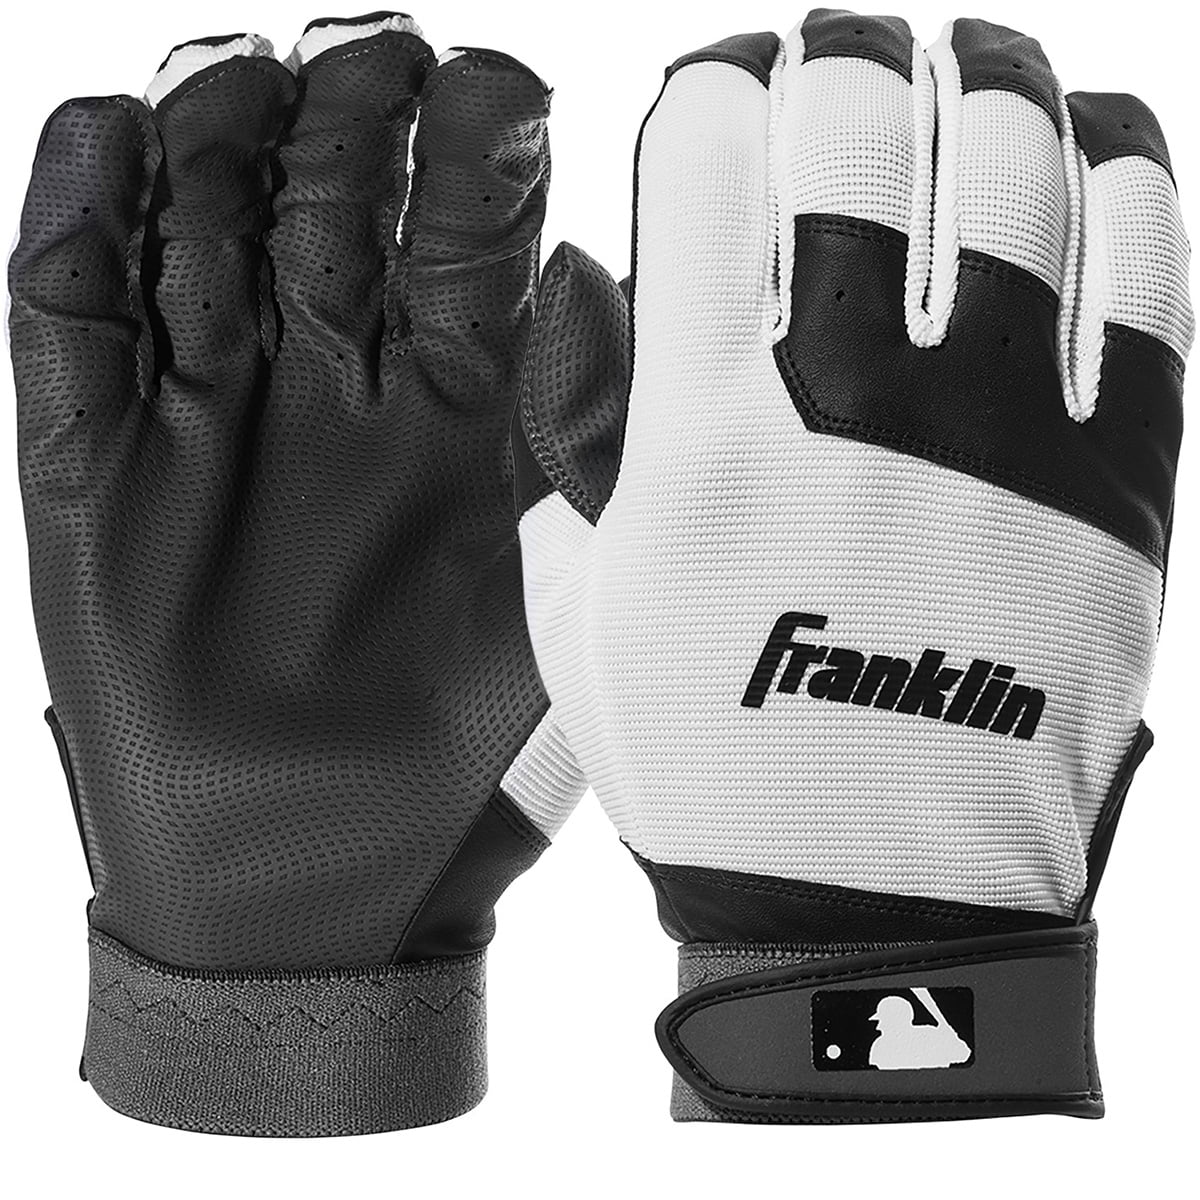 New Franklin Shok-Sorb Neo Baseball Batting Gloves Youth Size L White & Black 